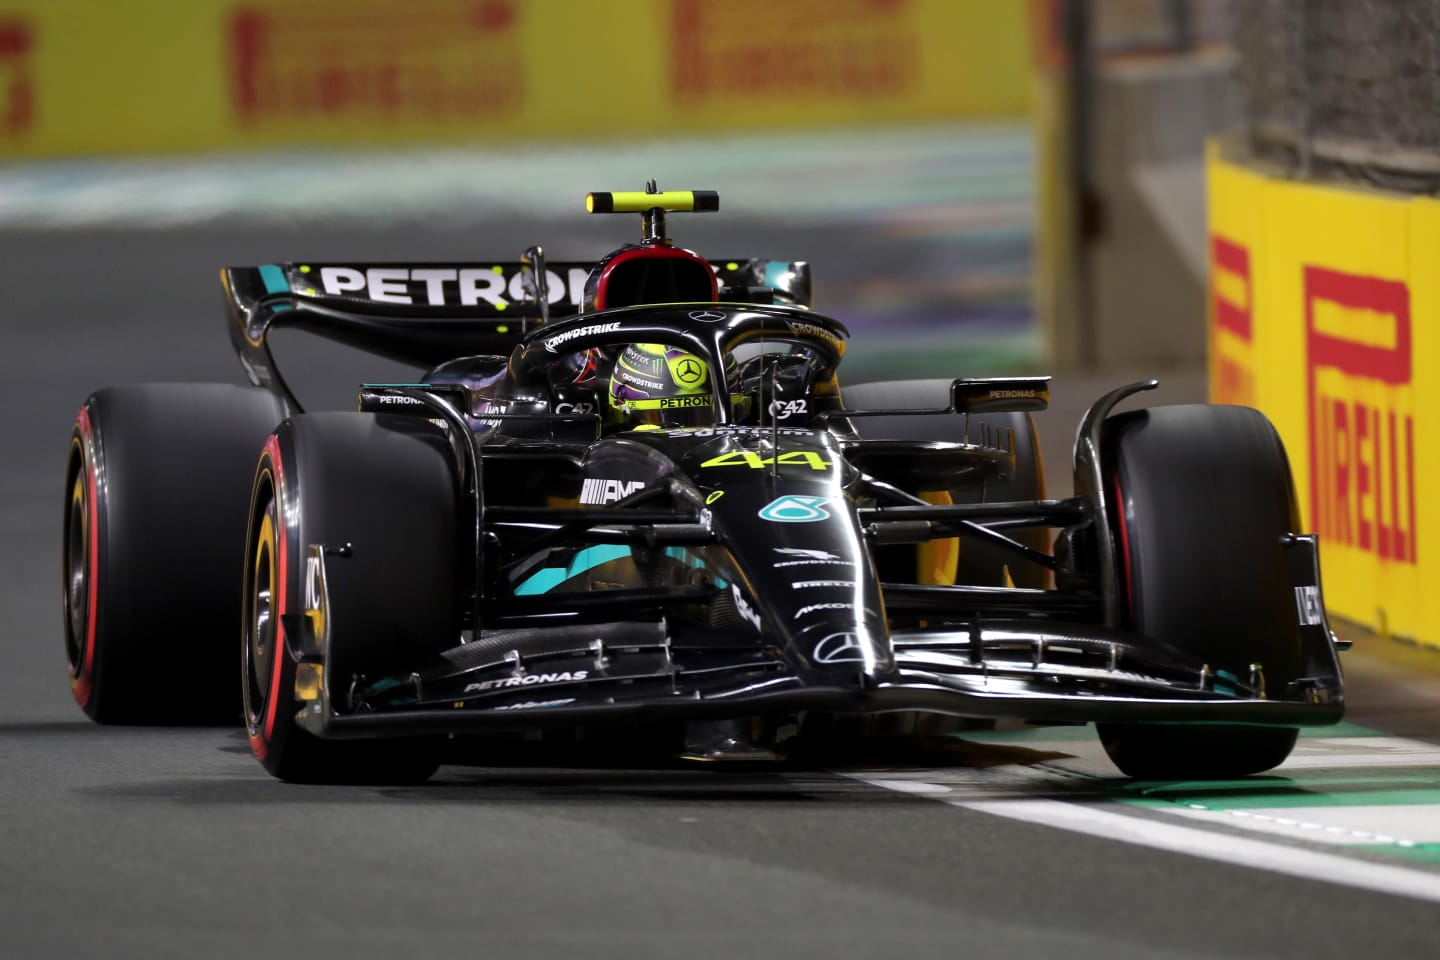 JEDDAH, SAUDI ARABIA - MARCH 18: Lewis Hamilton of Great Britain driving the (44) Mercedes AMG